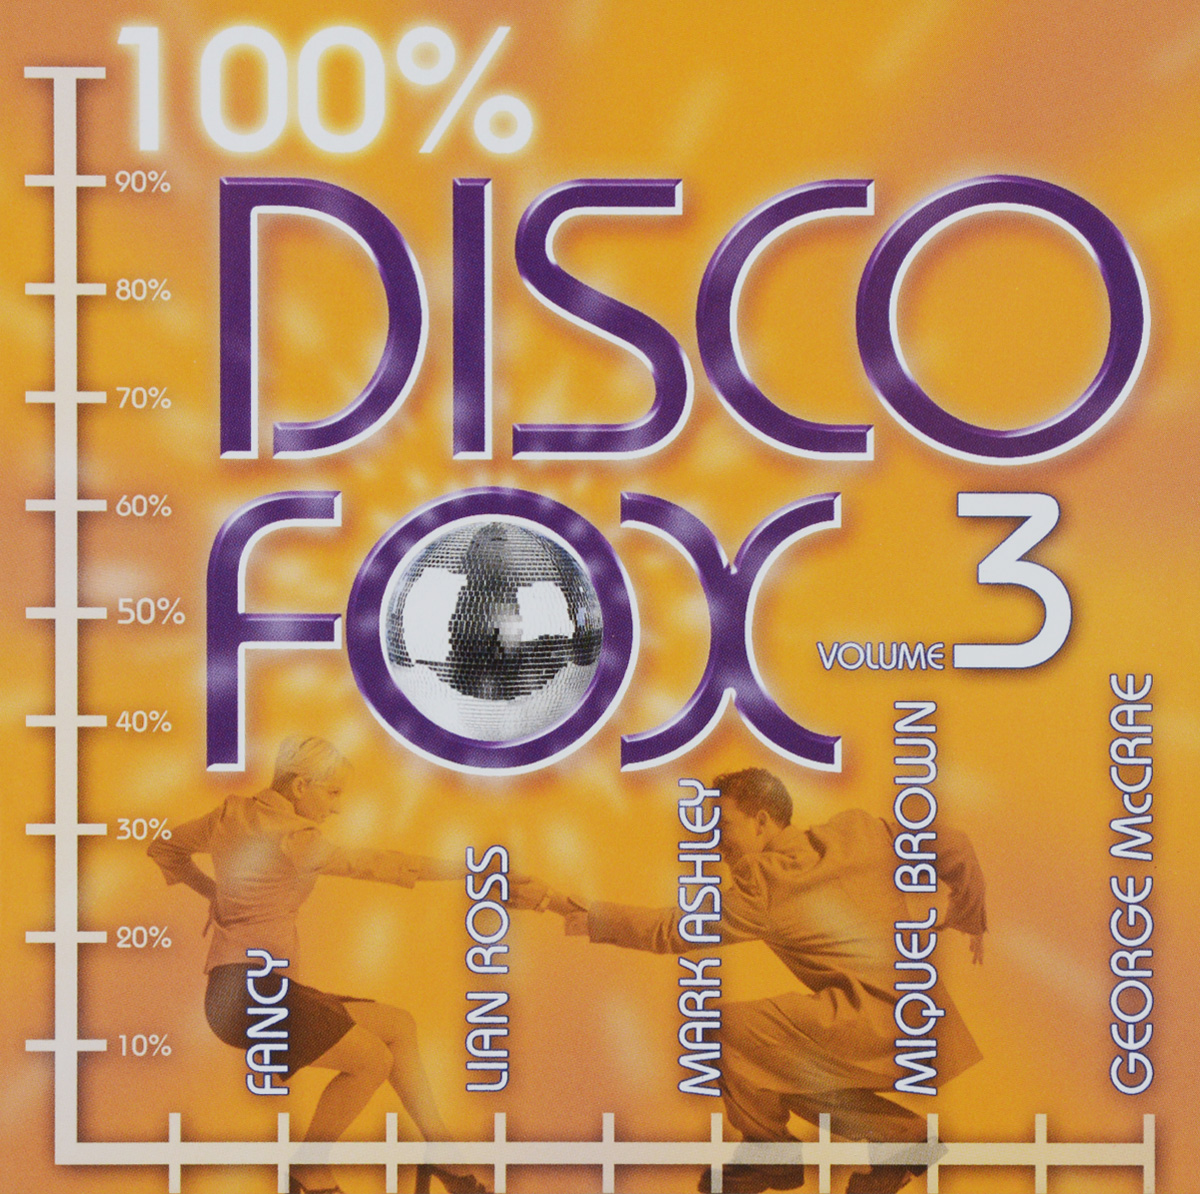 Fox 100. Gala Disco Fox 100% - Vol. 02. Disco Fox 80 Volume 7 album Cover. Disco Fox 80 Volume 5 album Cover.